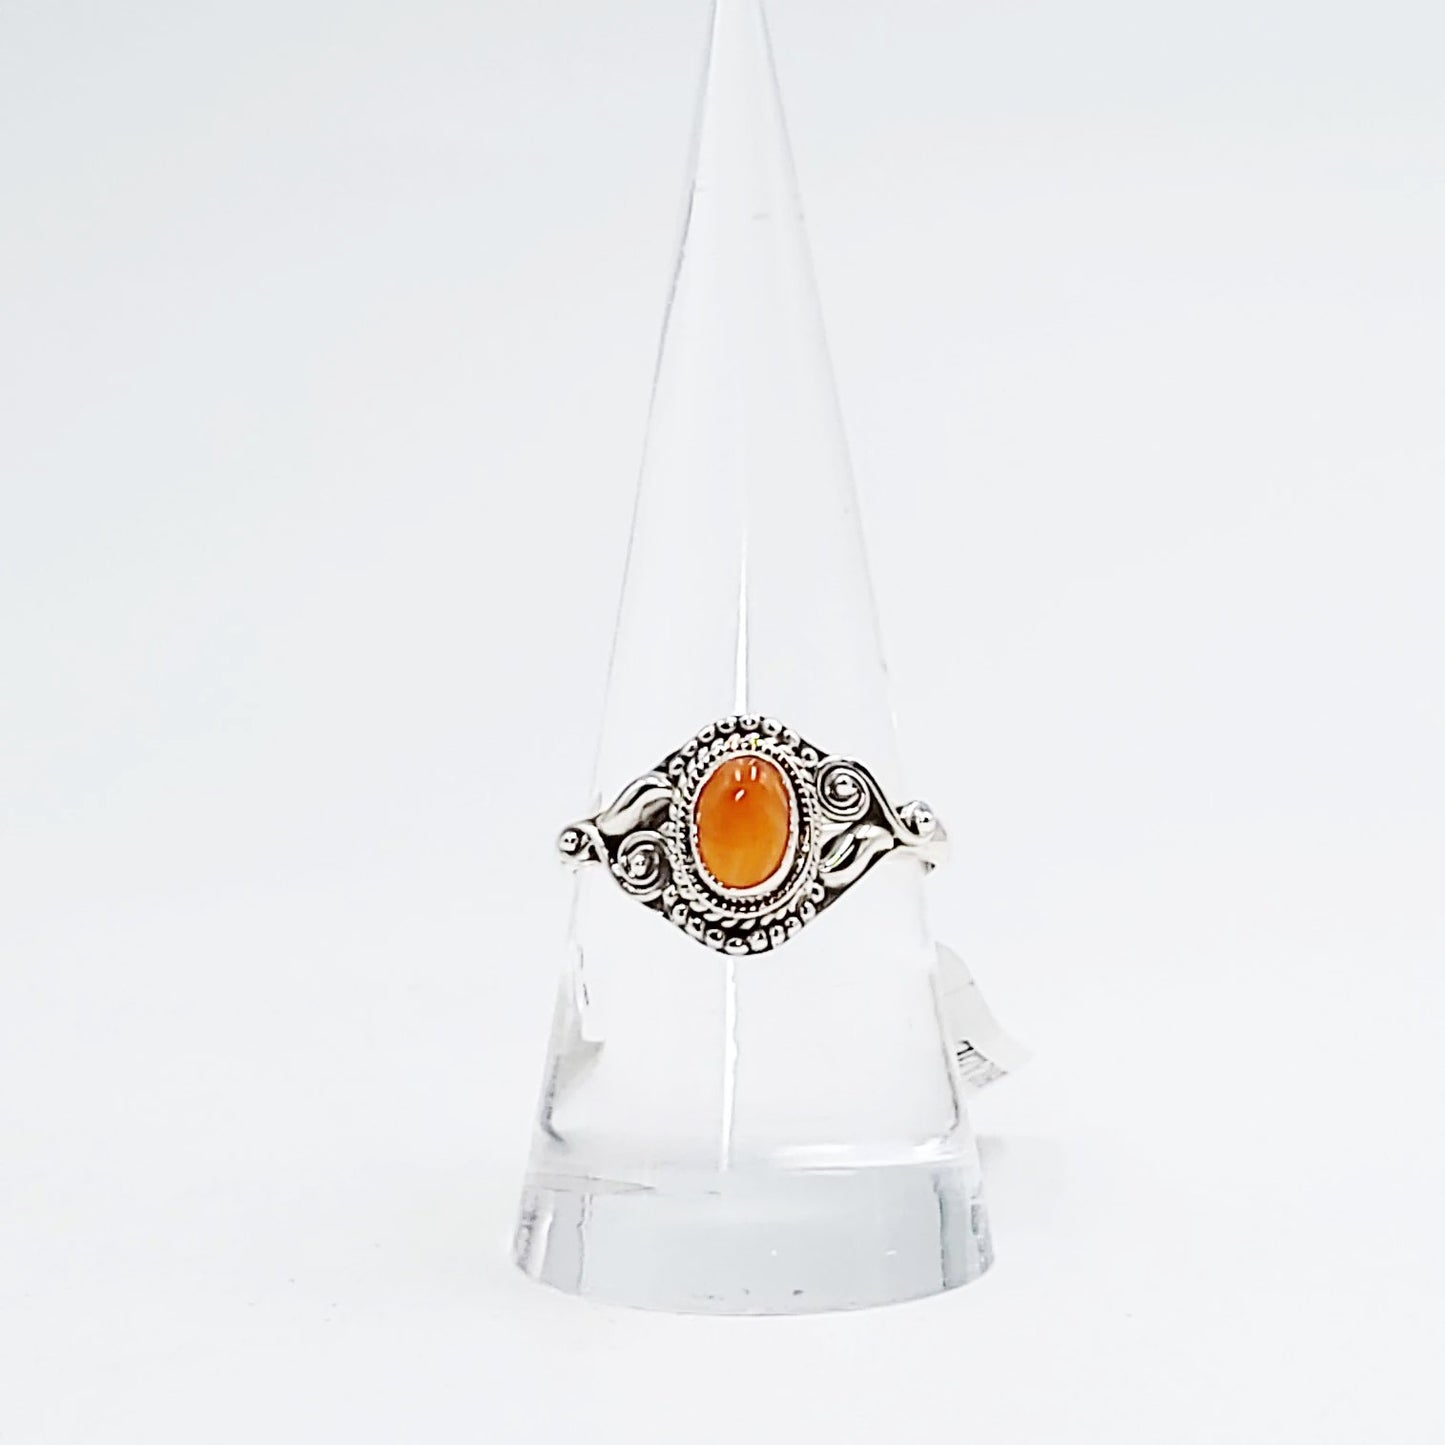 Carnelian Ring "Dahlia" Sterling Silver Size 9